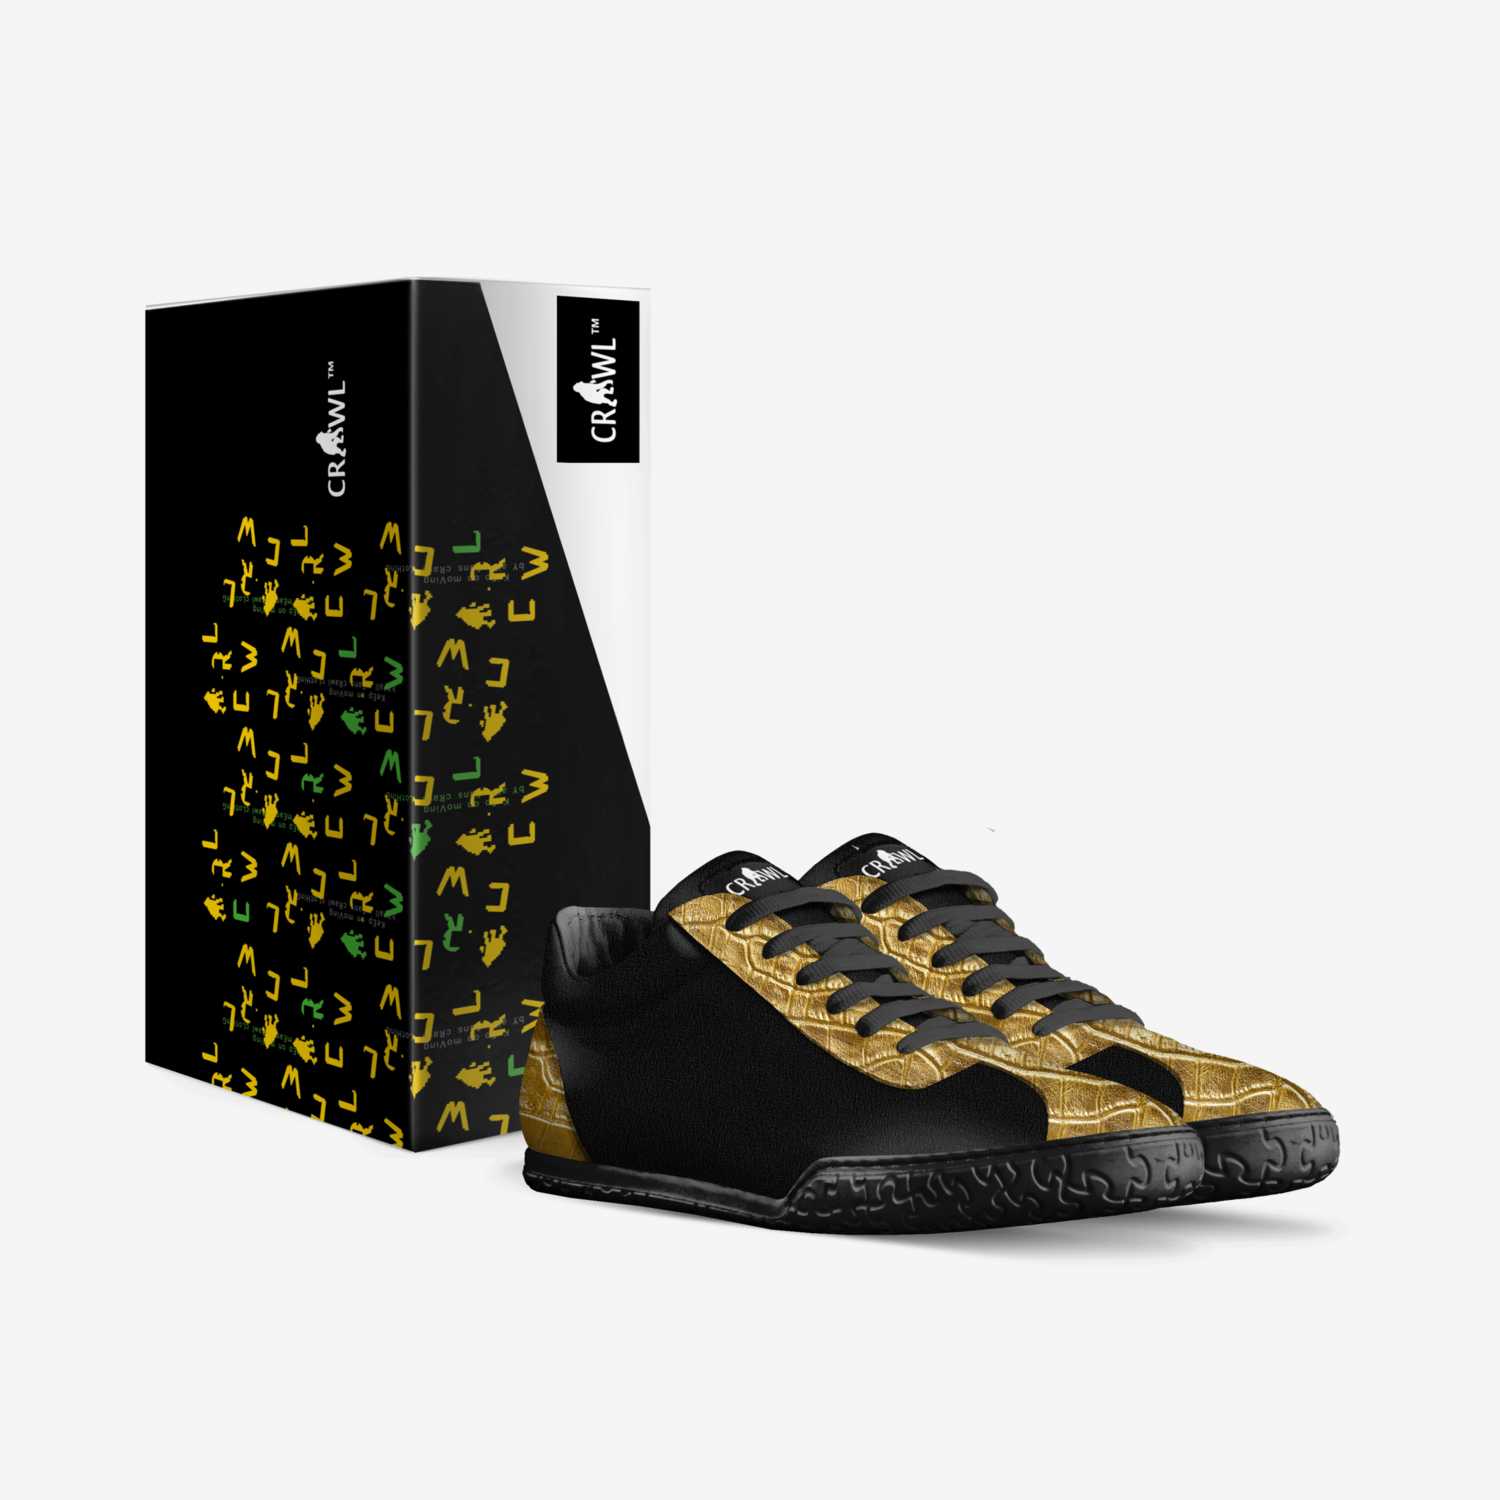 Crawl custom made in Italy shoes by Mandla Shongwe | Box view